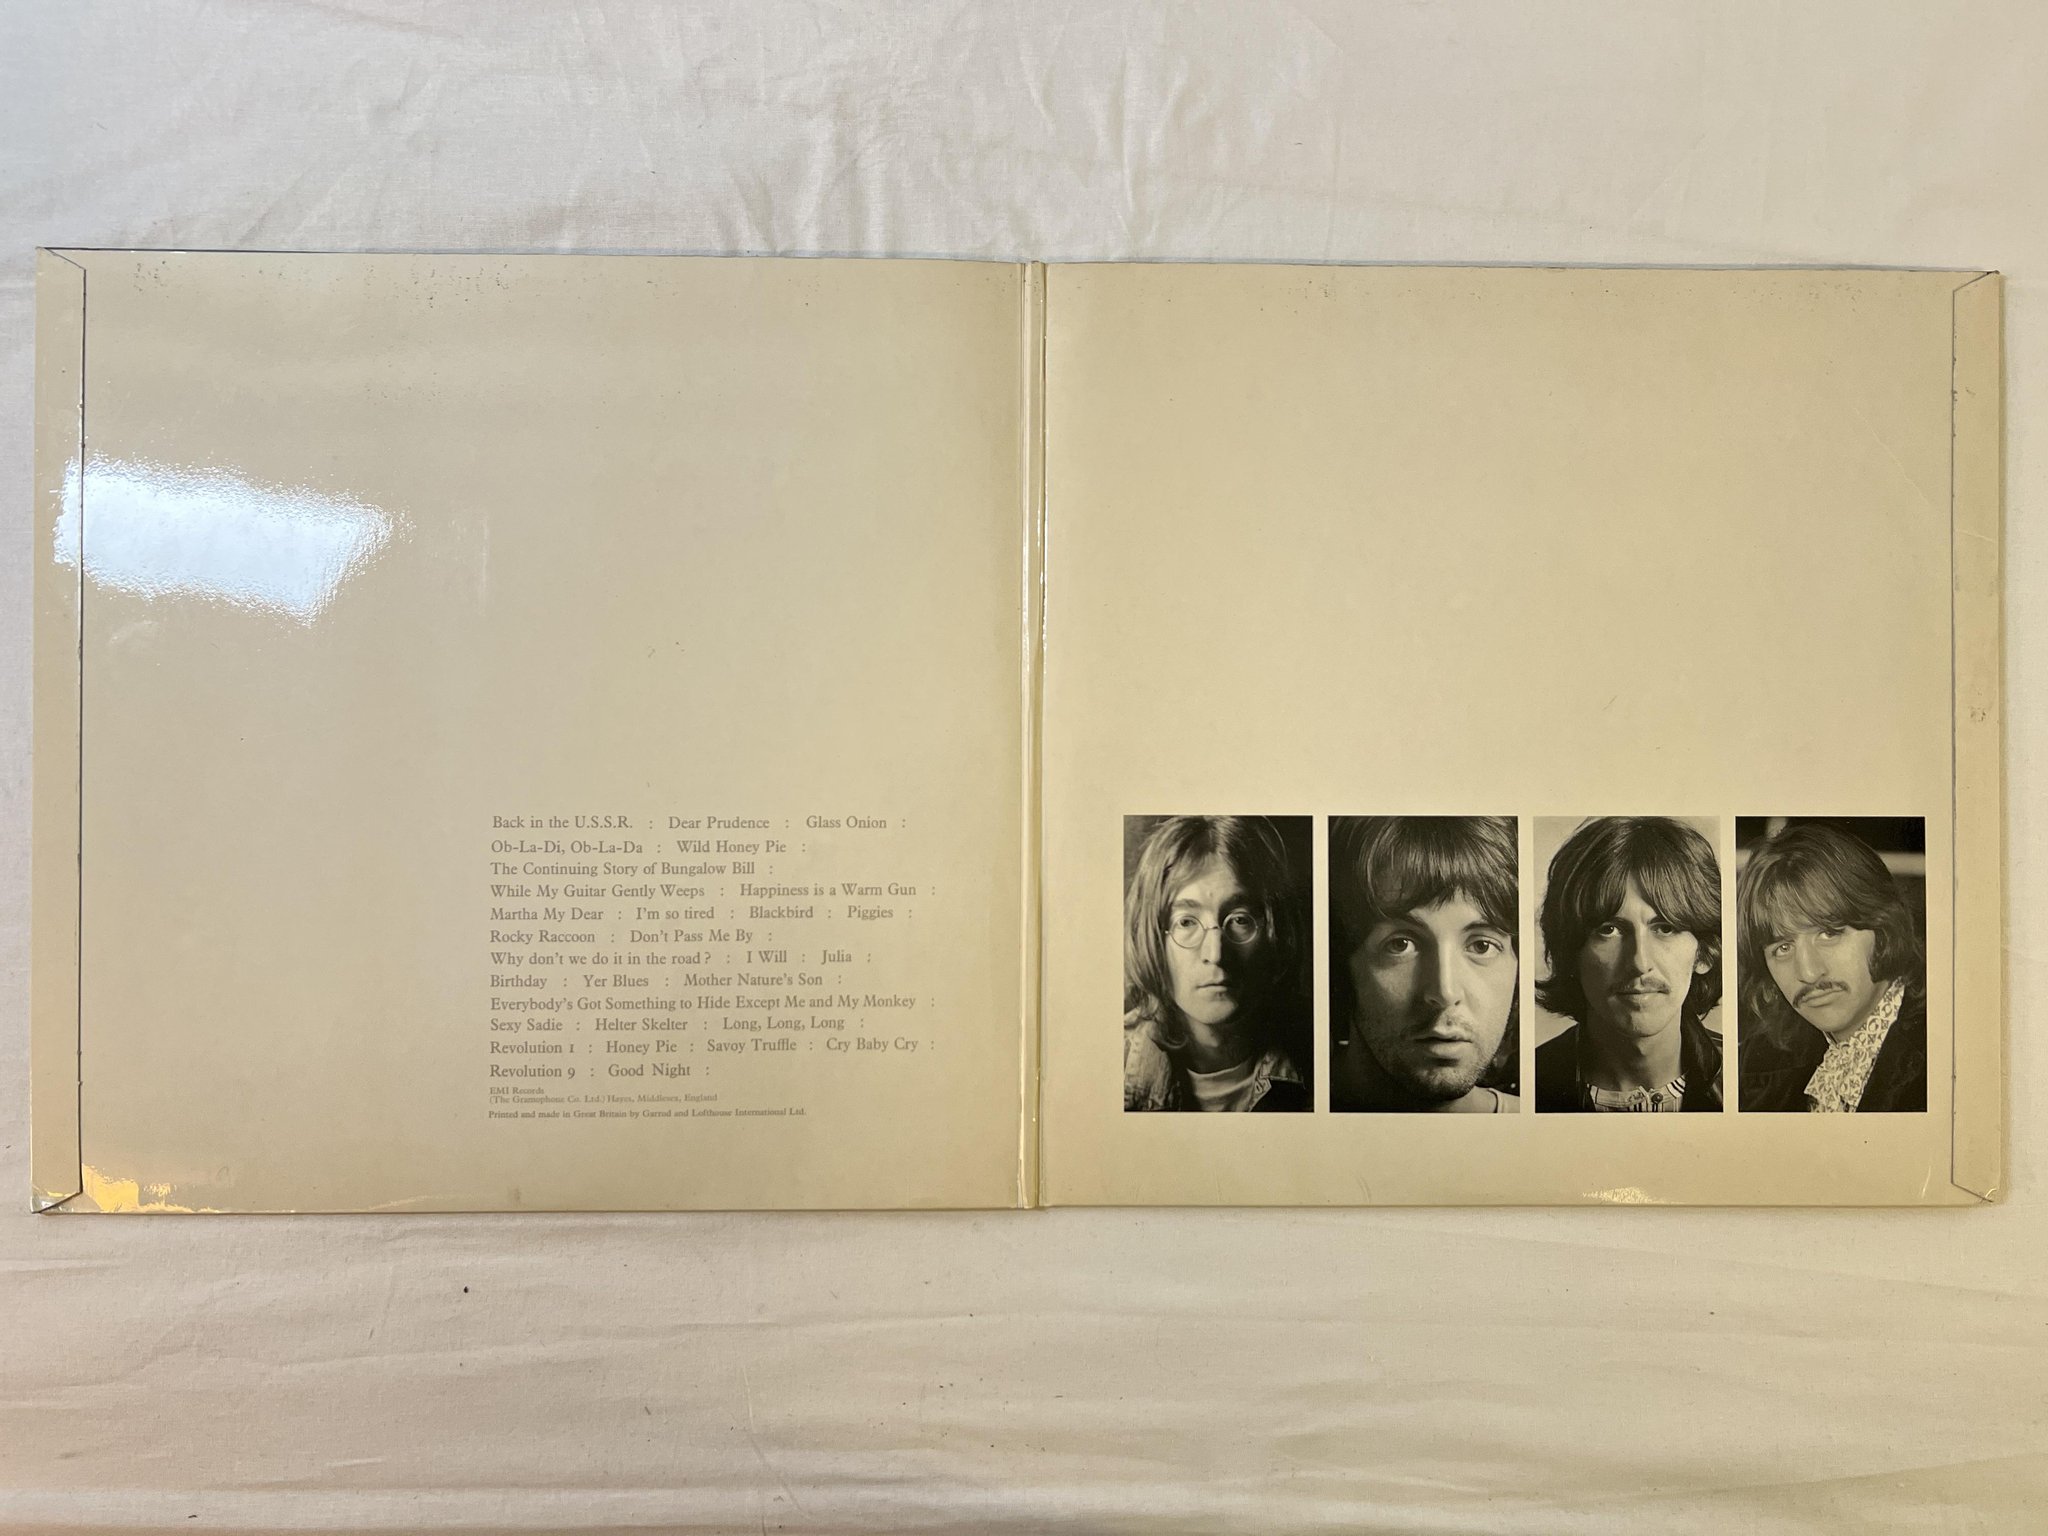 Omslagsbild för skivan THE BEATLES white album 2xLP -68 UK APPLE PCS 7068 complete #0440622